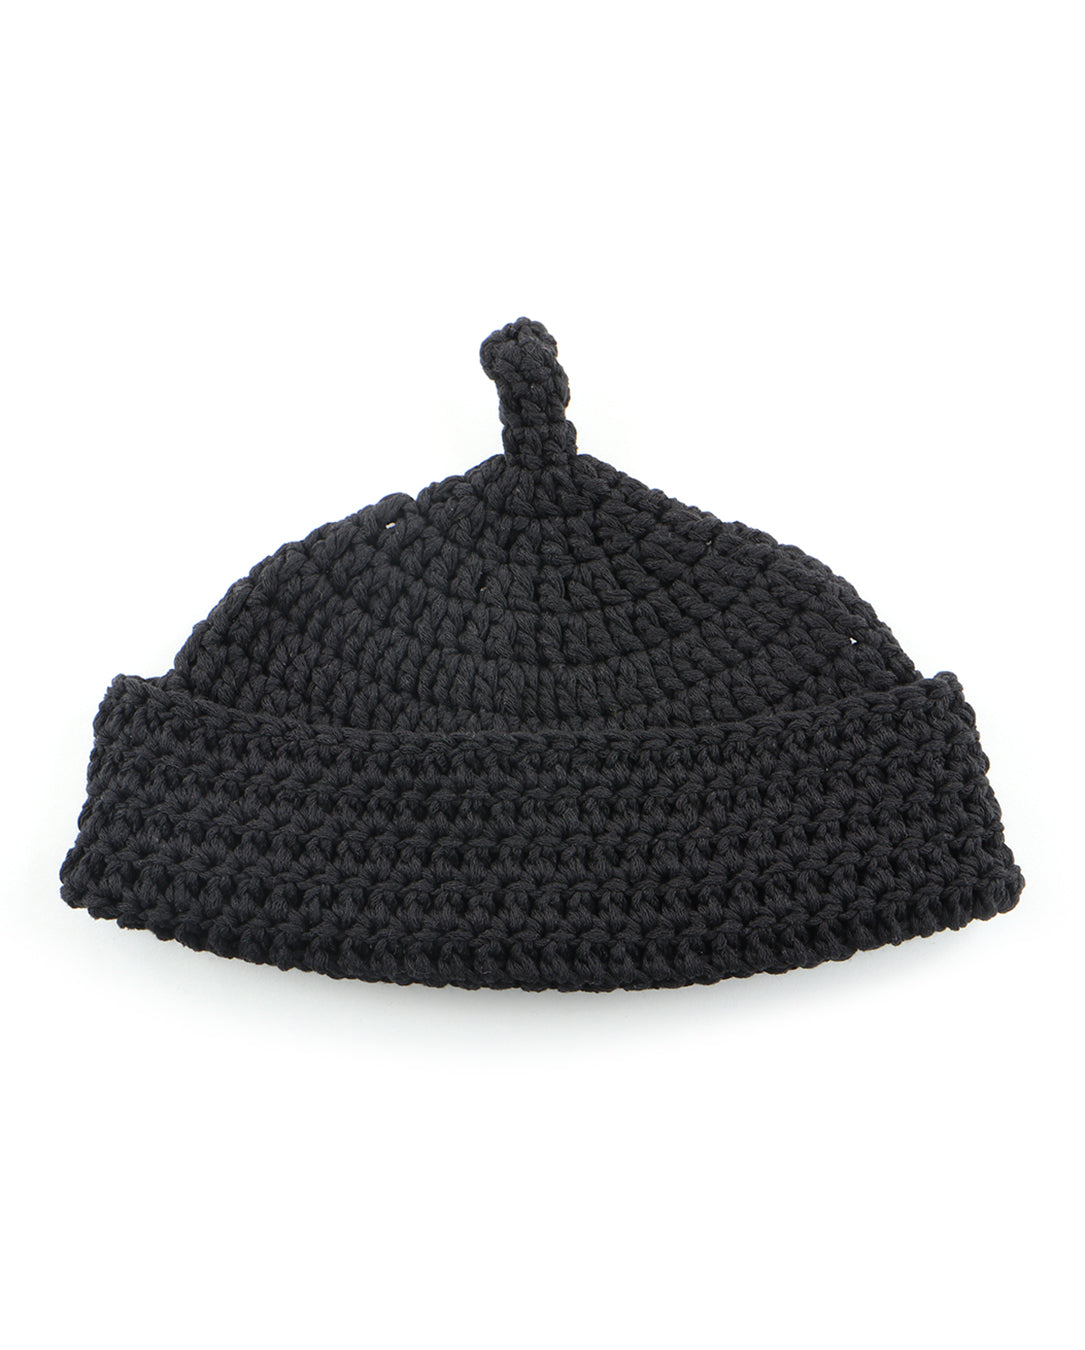 24224 Crocheted Beanie black